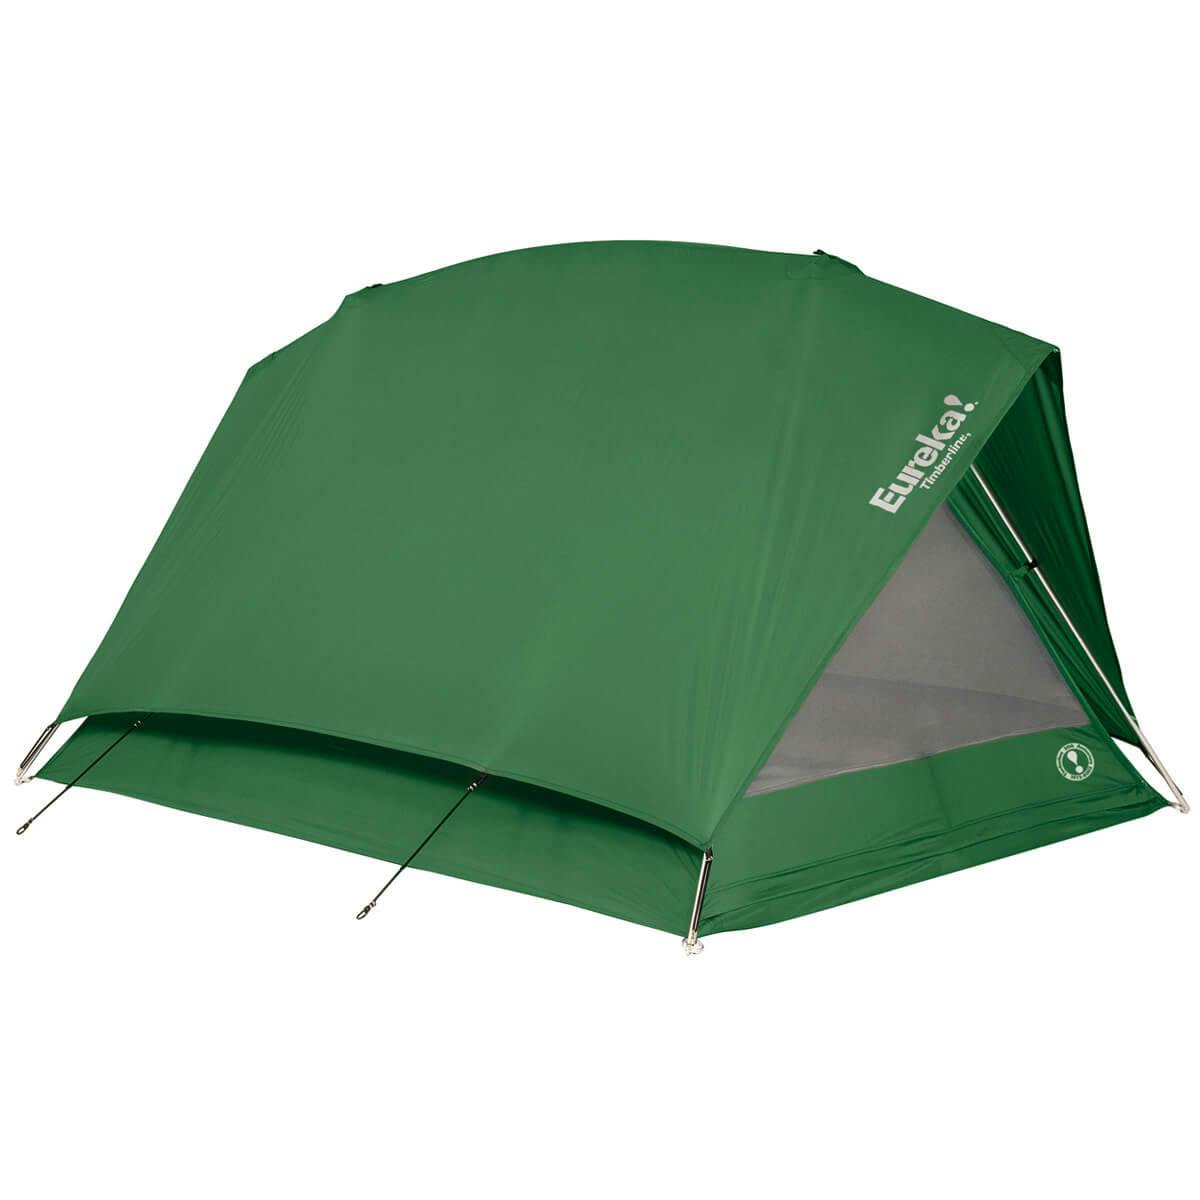 Eureka! Timberline 4 Person Tent · Dark Green